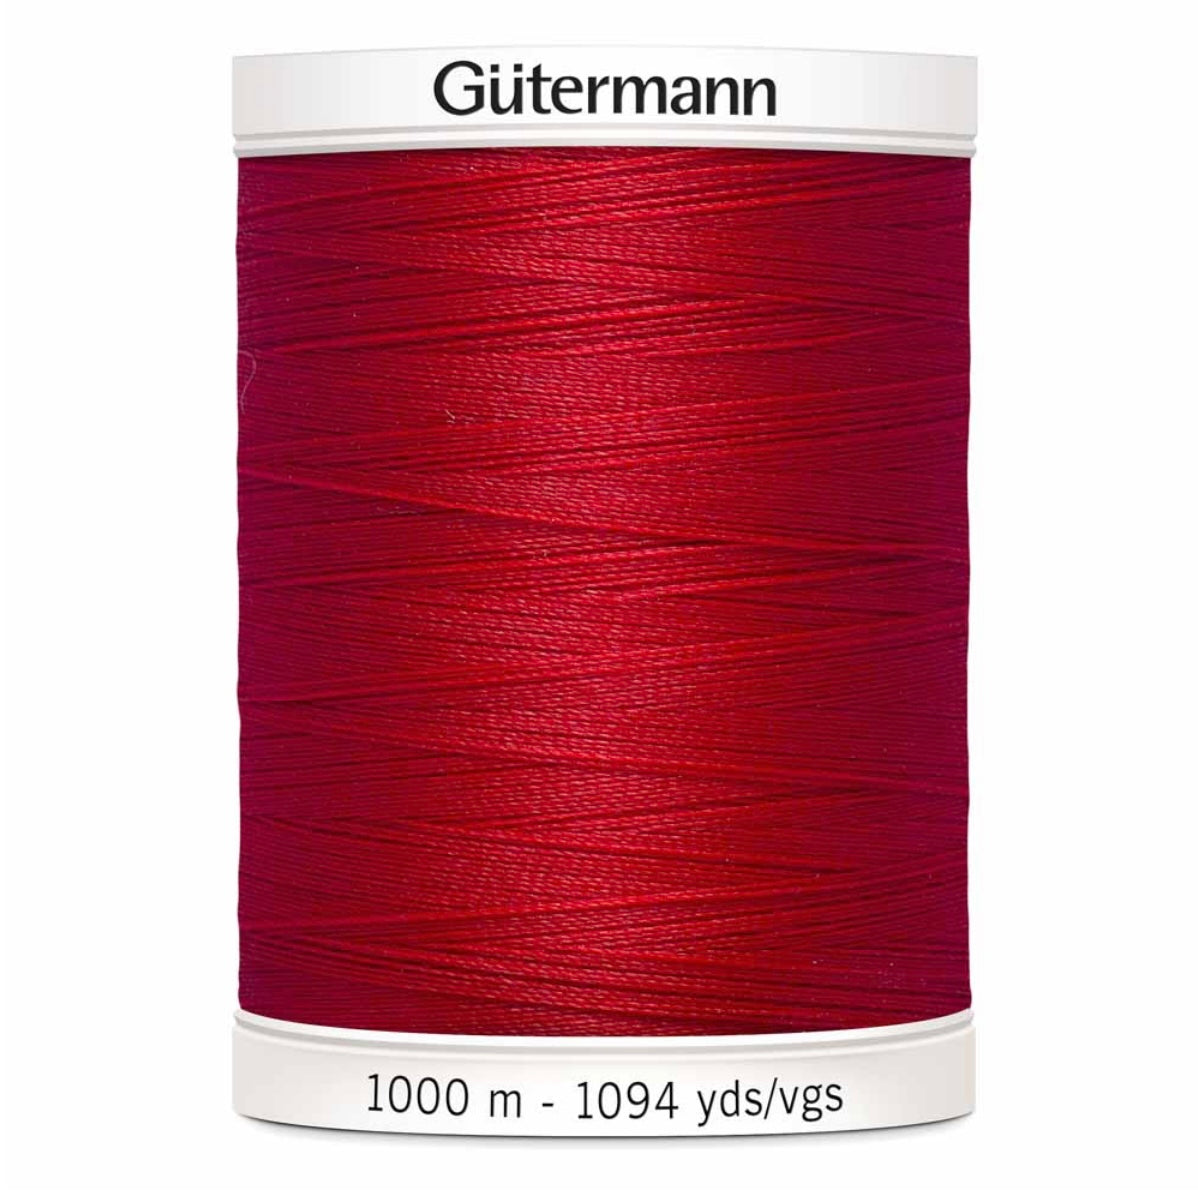 Polyester Sew-All Thread - Gütermann - Col. 410 / Scarlet